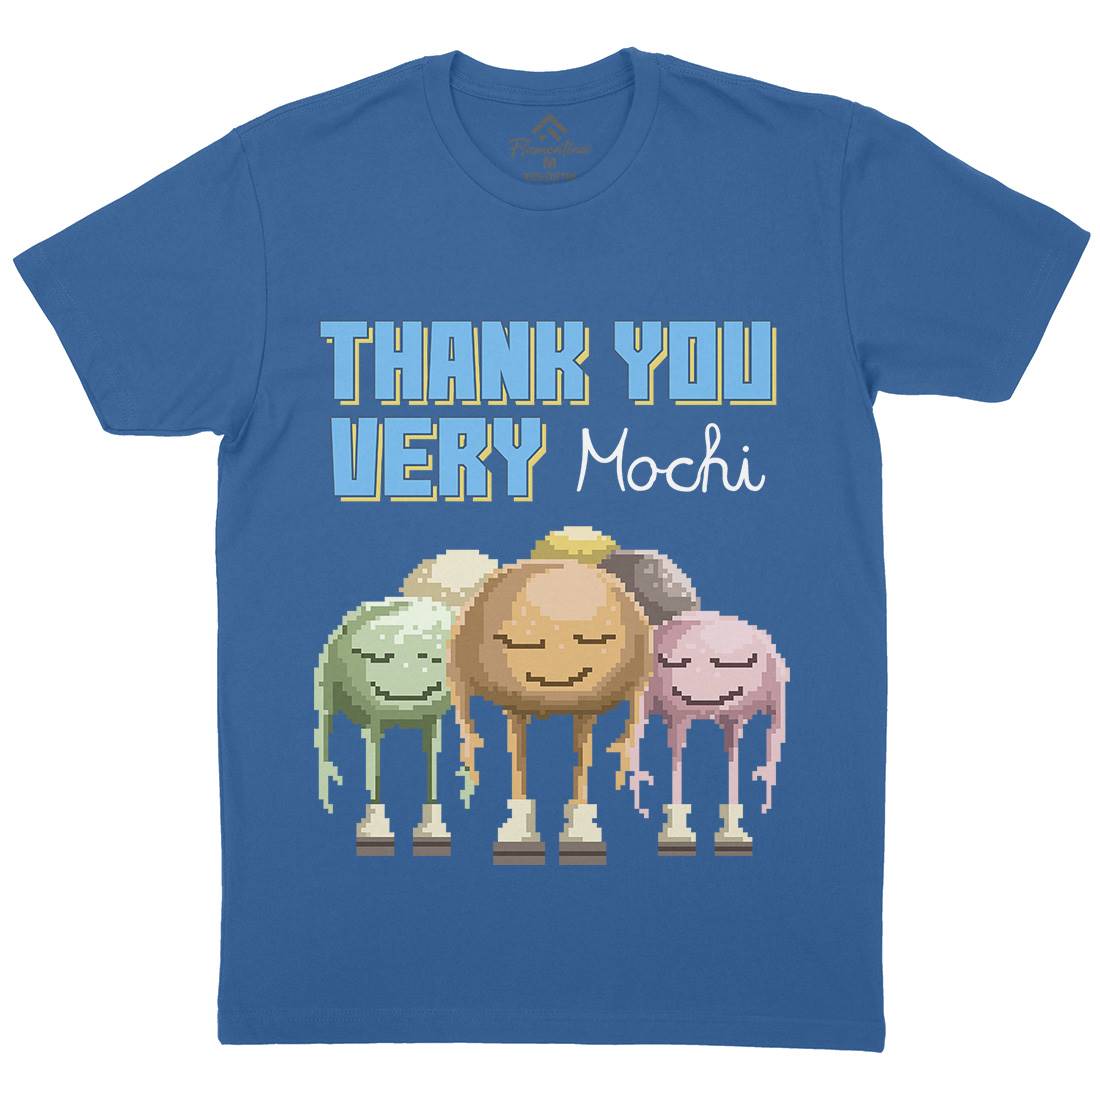 Thank You Very Mochi Mens Crew Neck T-Shirt Food B966